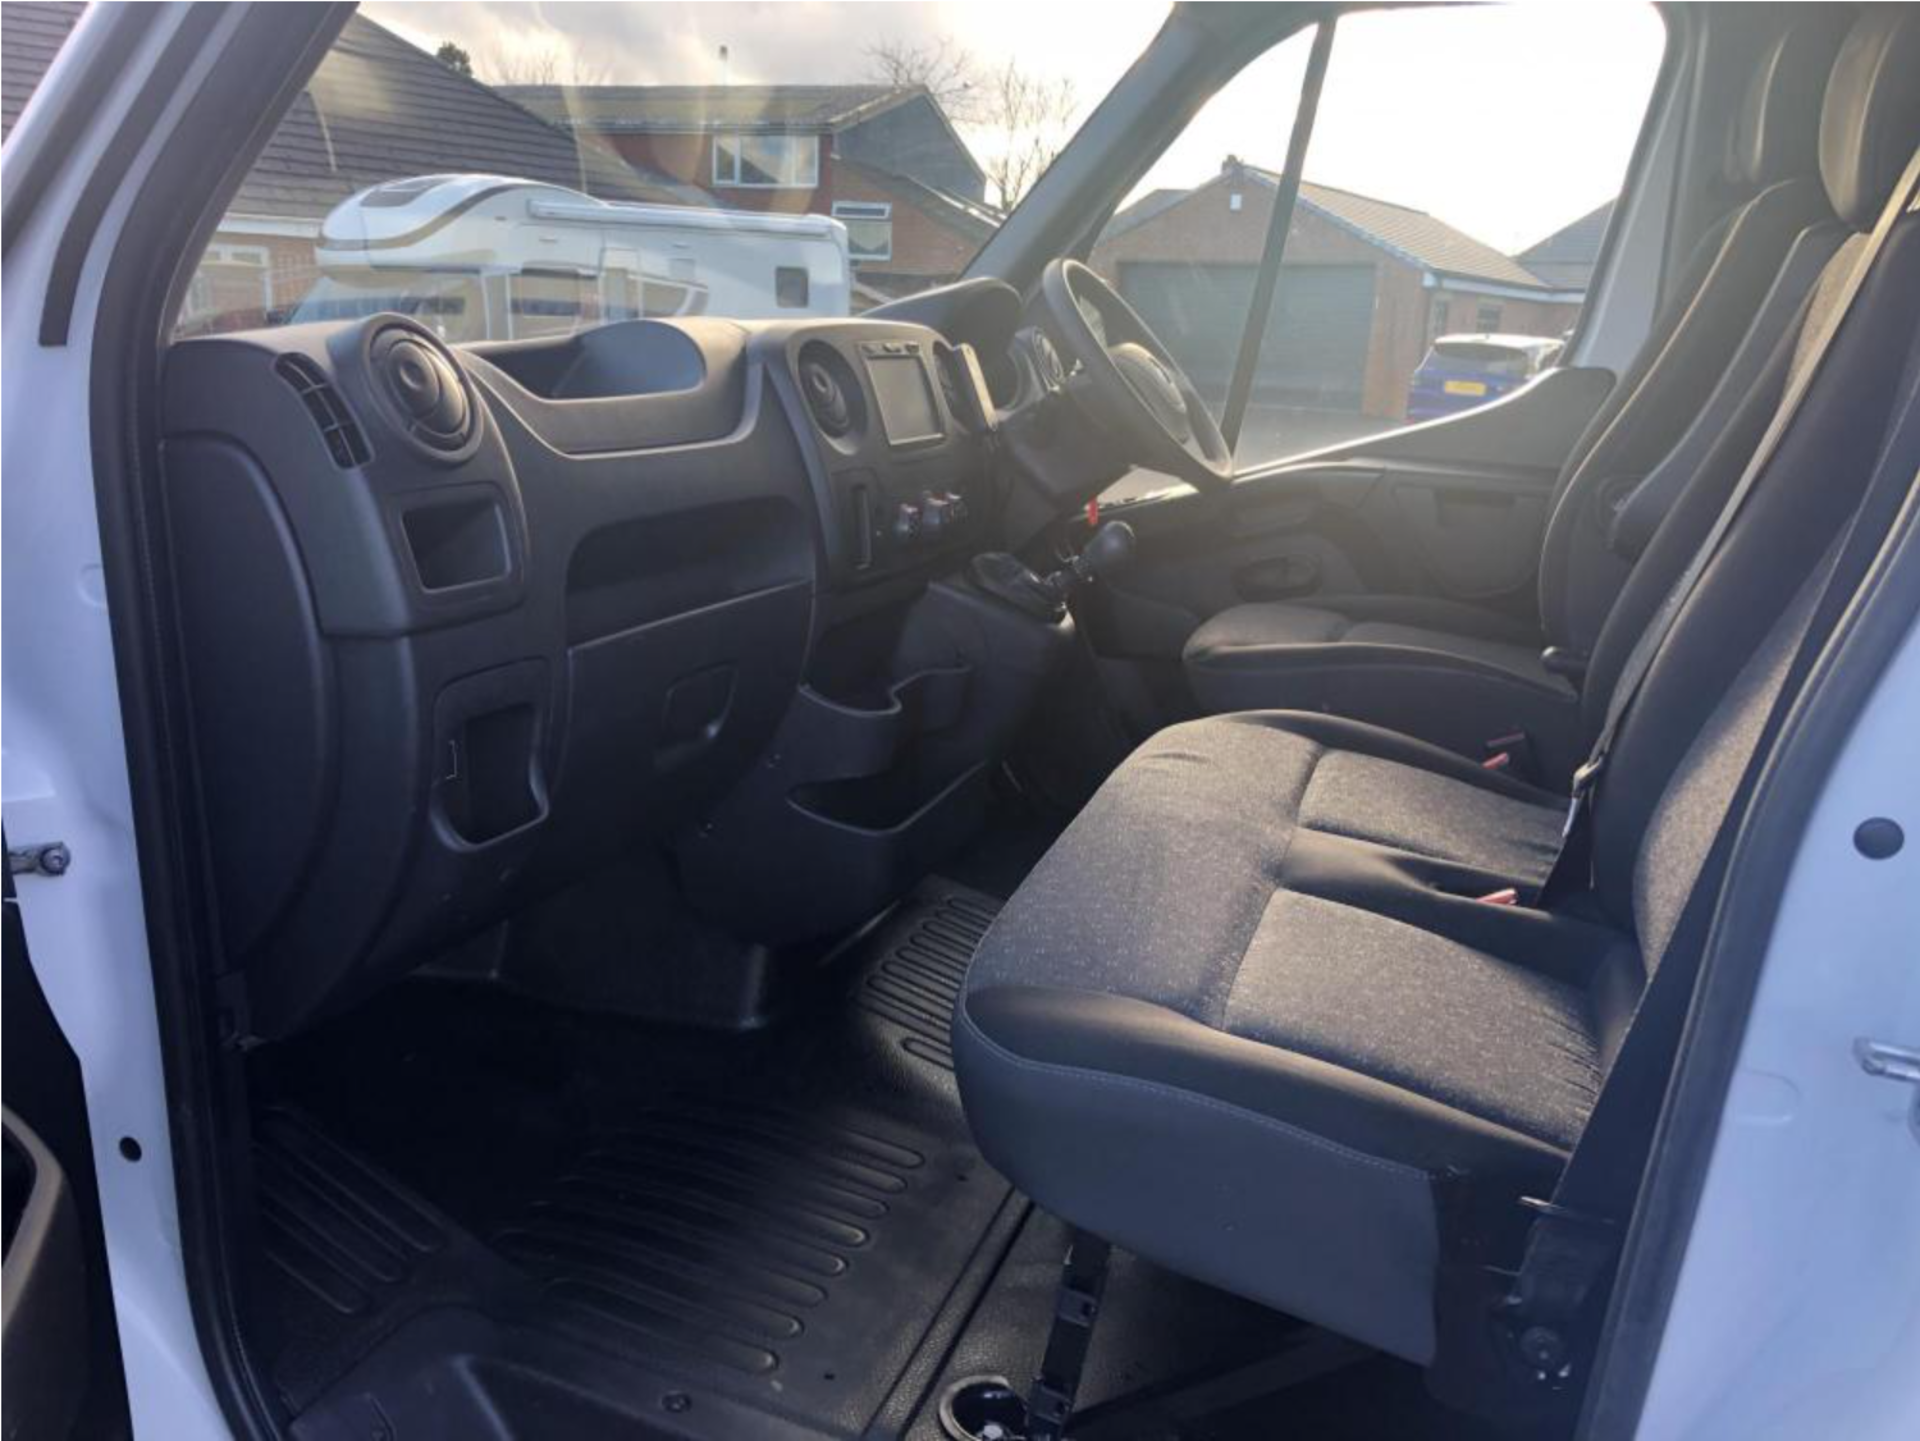 2019 Vauxhall movano 140 bhp bi turbo long and high crew van, euro 6, 120.000 miles *PLUS VAT* - Image 11 of 17